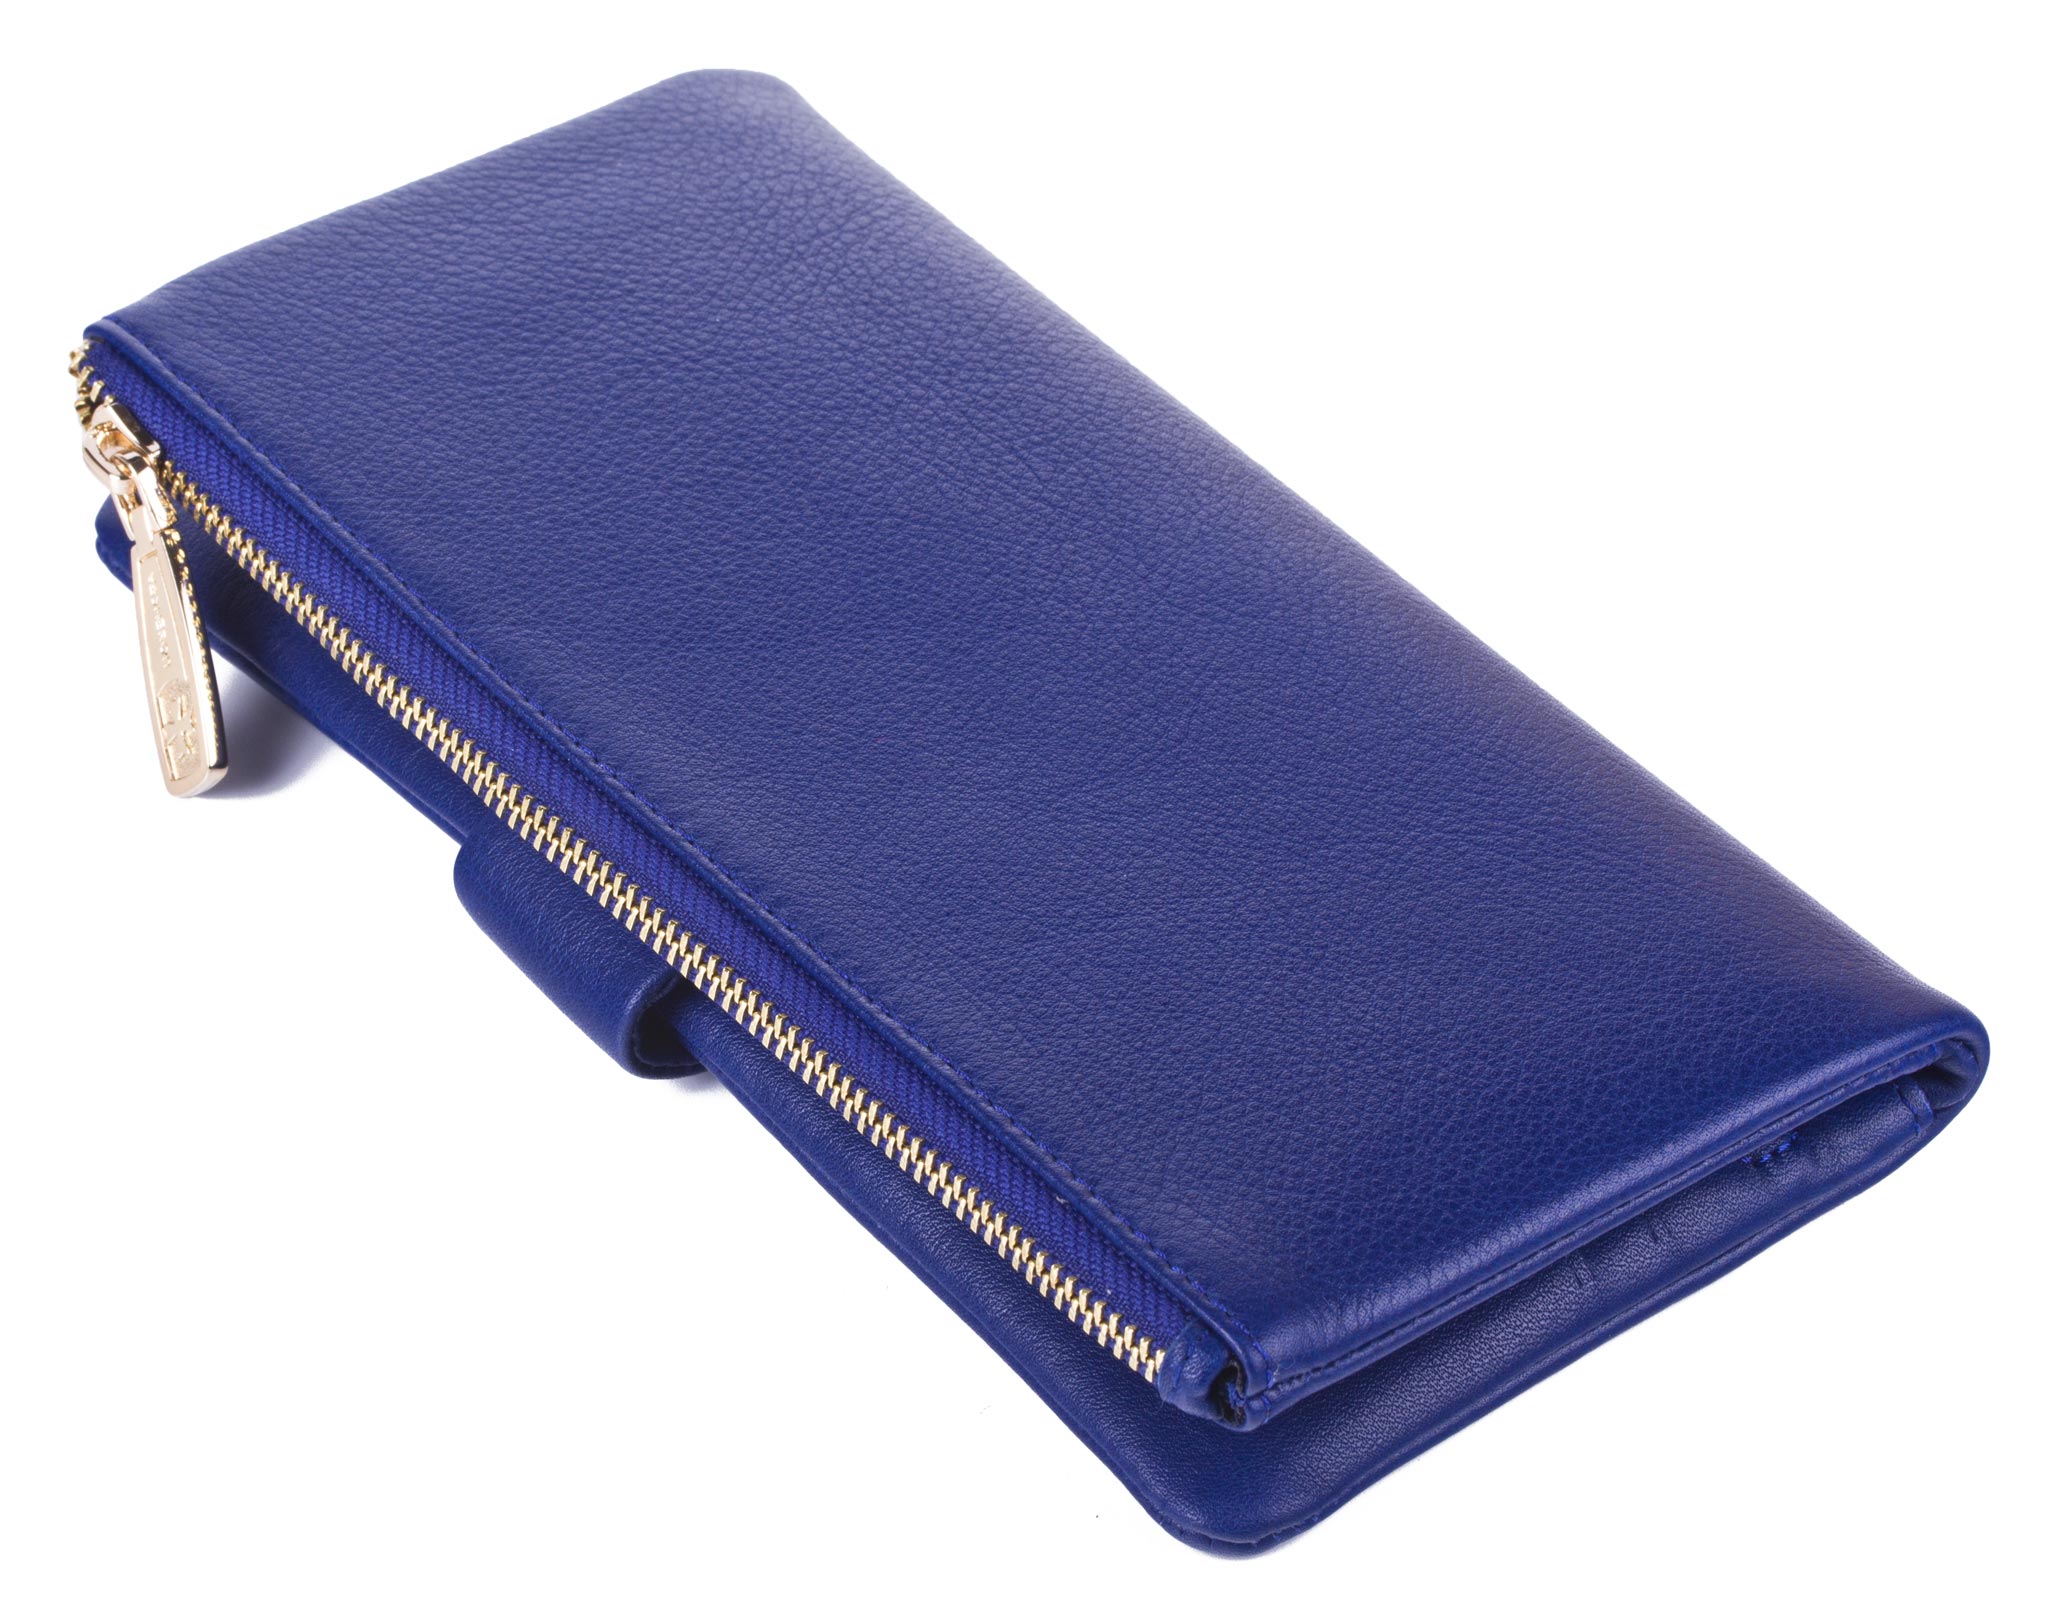 Бумажник
Narvin
9688-N.Polo Ultra Blue Кошельки и портмоне